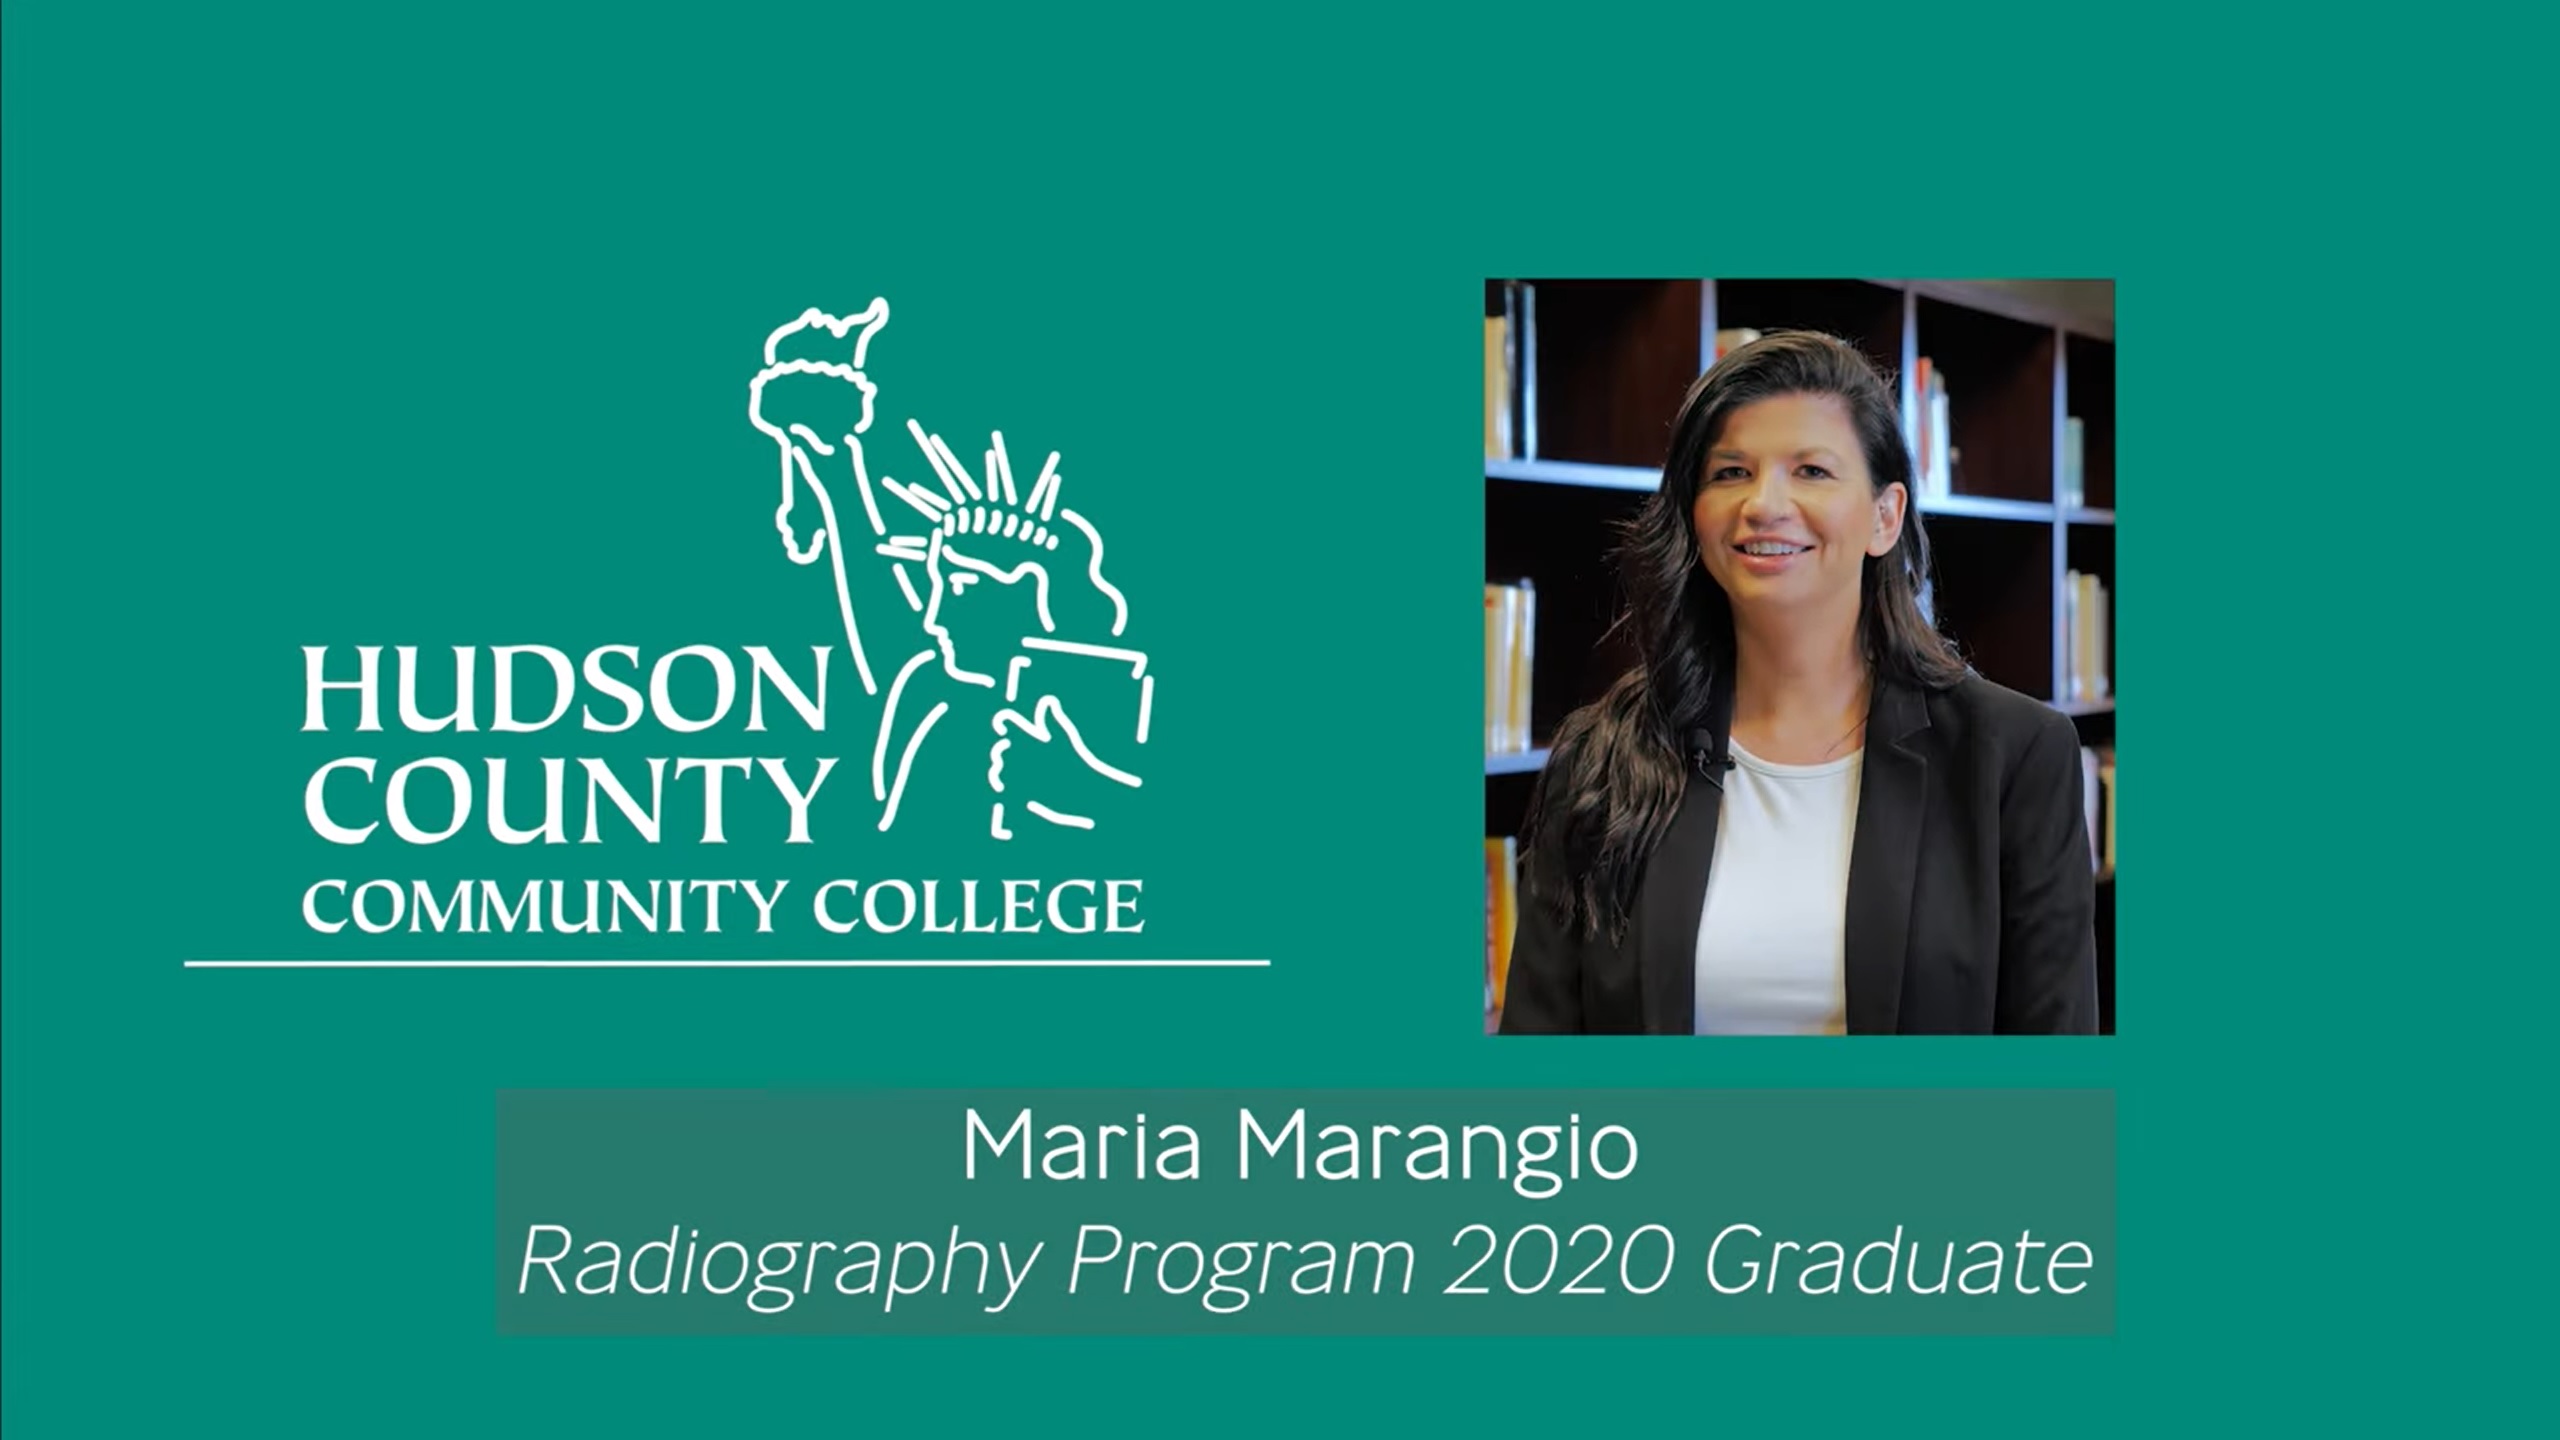 Maria Marangio - Radiography Program 2020 Graduate